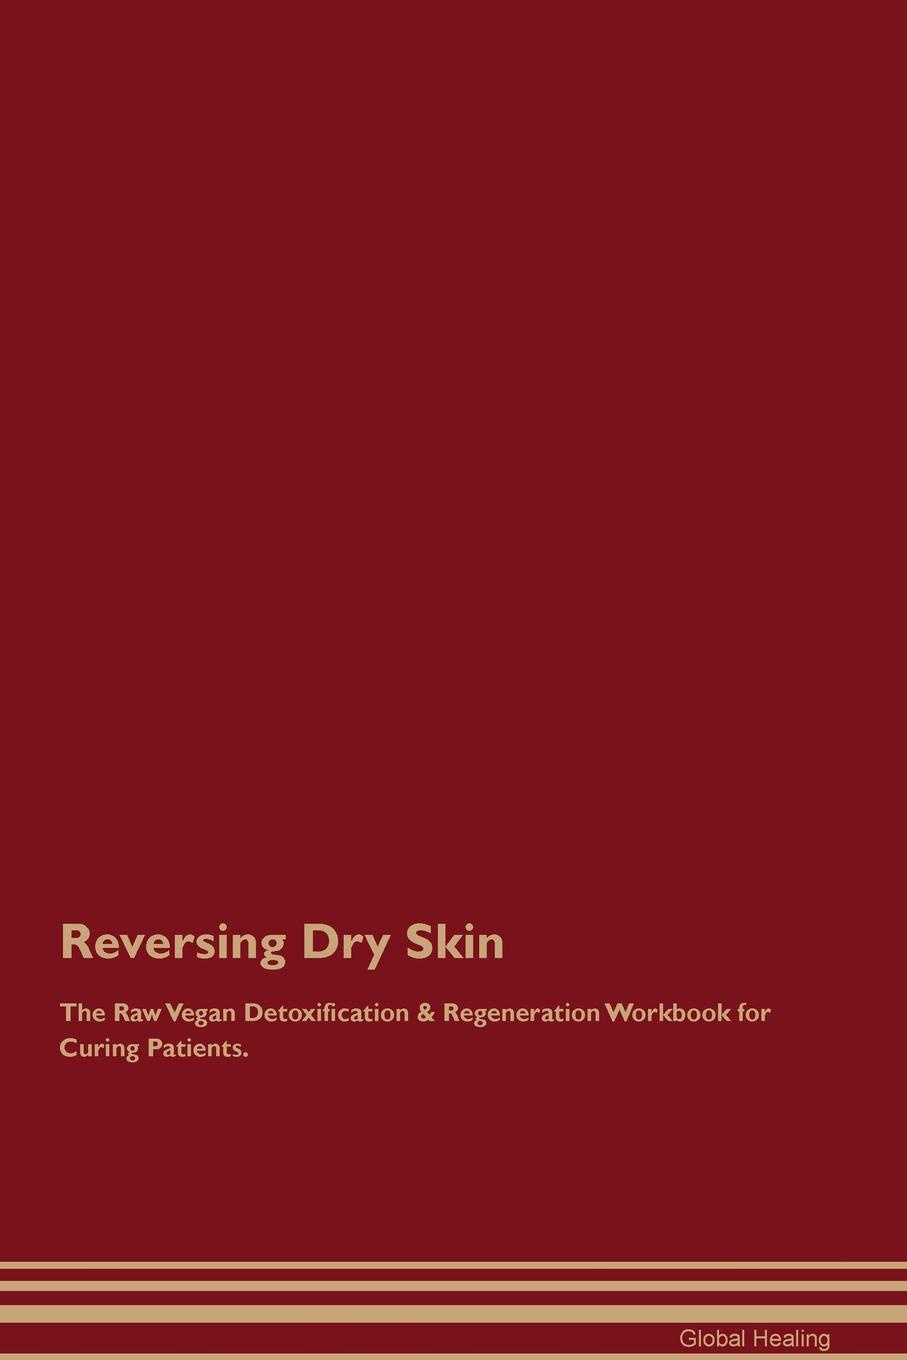 Reversing Dry Skin The Raw Vegan Detoxification & Regeneration Workbook for Curing Patients